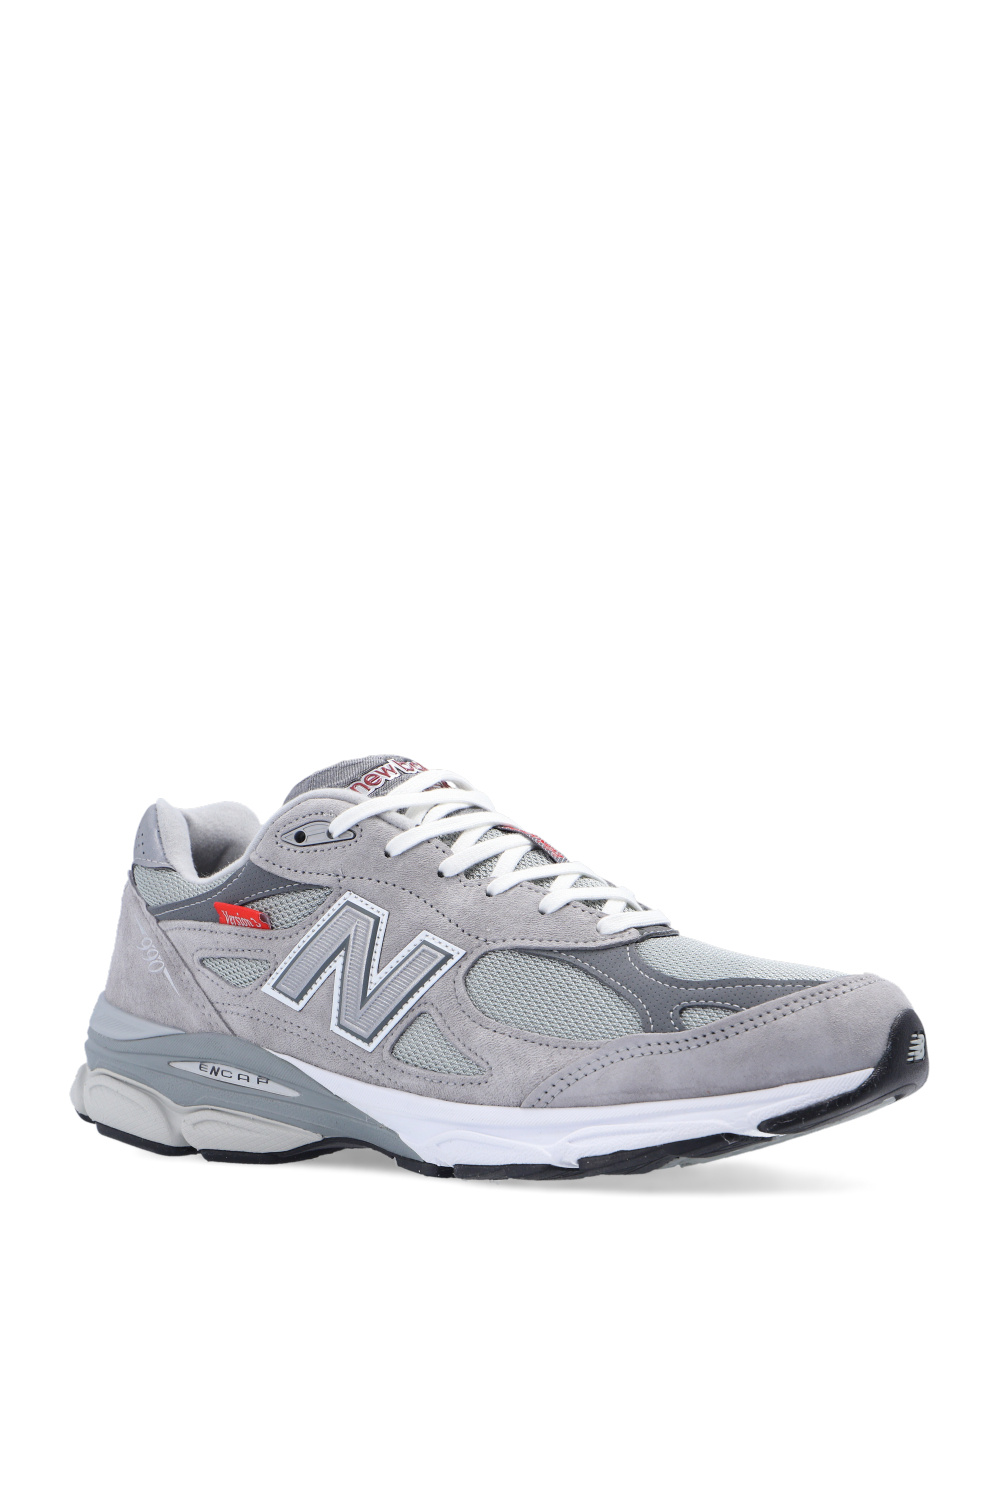 New Balance '990 VS3' sneakers | New Balance 327 Navy Blue